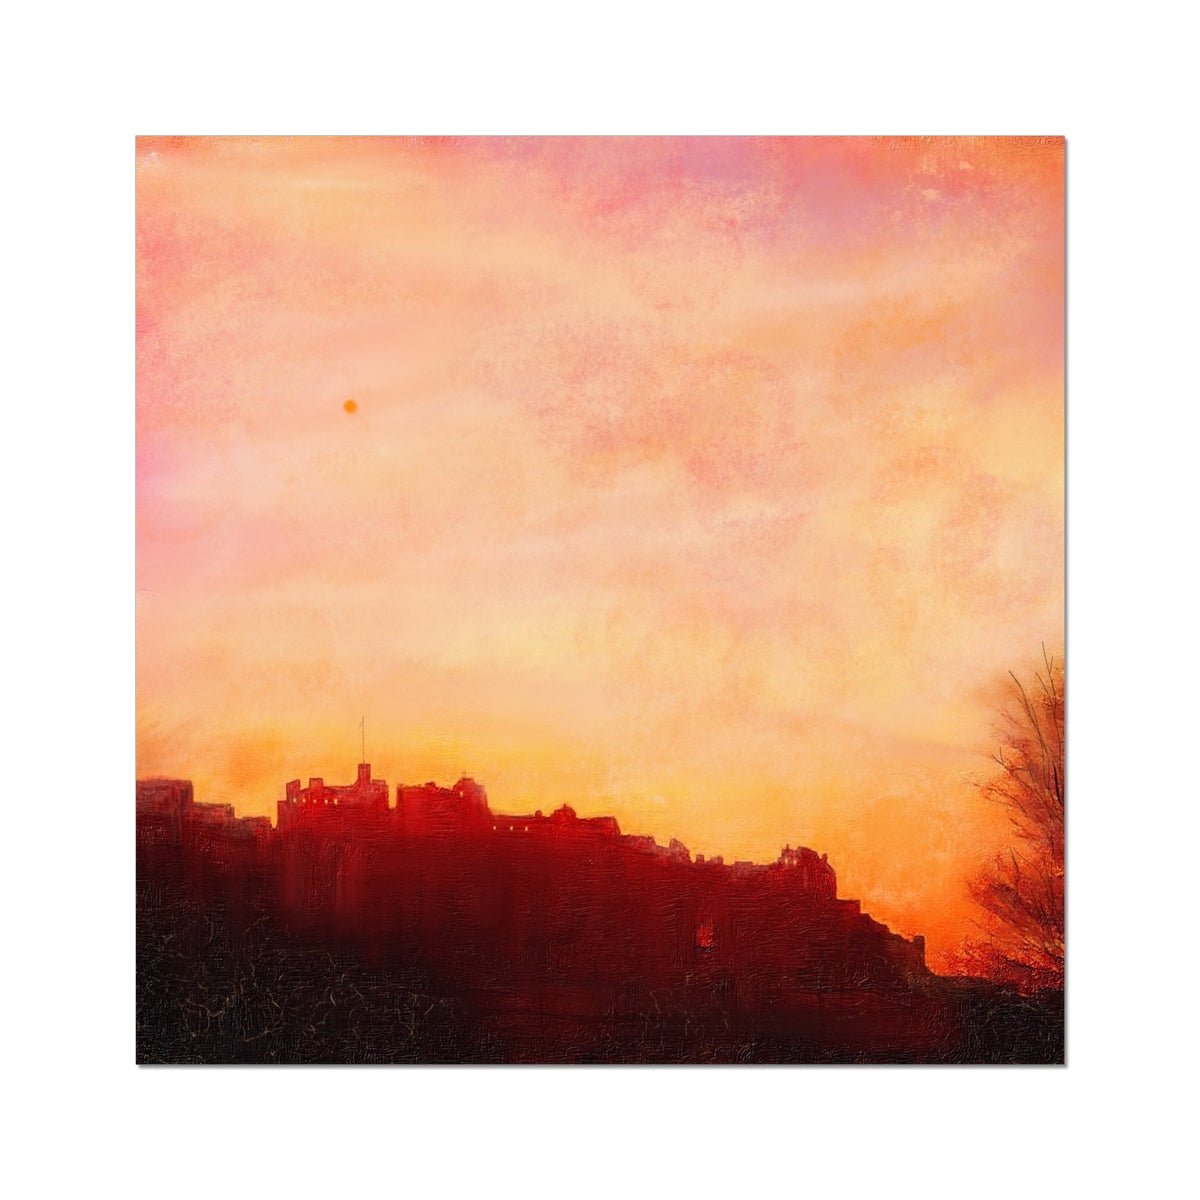 Edinburgh Castle Sunset Painting | Fine Art Prints From Scotland-Unframed Prints-Historic & Iconic Scotland Art Gallery-24"x24"-Paintings, Prints, Homeware, Art Gifts From Scotland By Scottish Artist Kevin Hunter